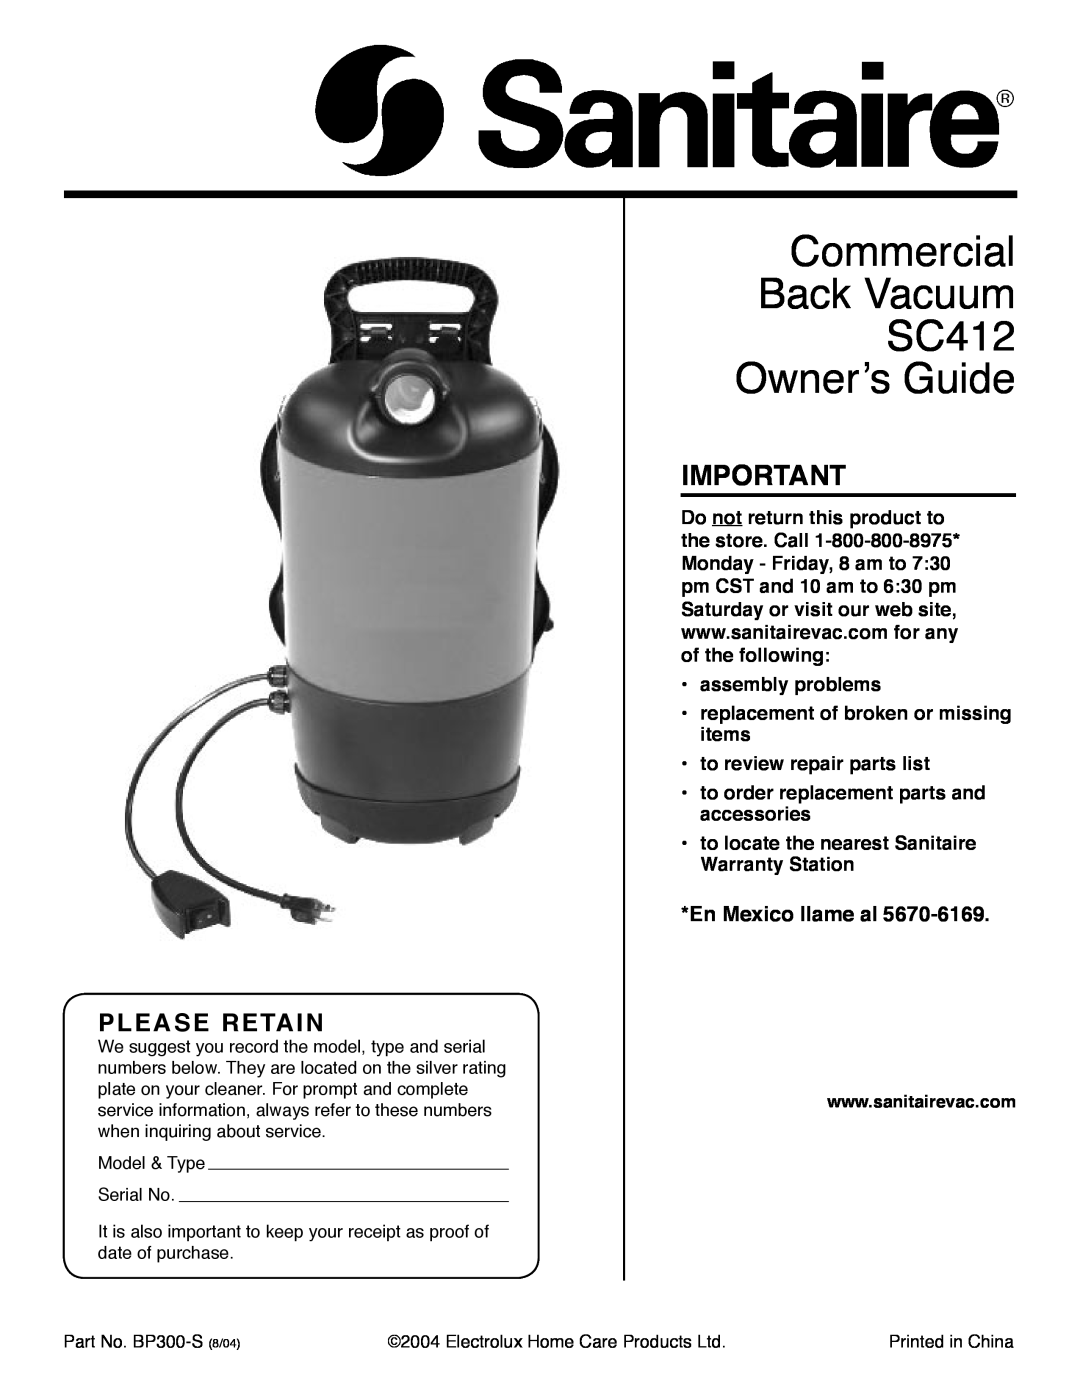 Electrolux warranty En Mexico llame al, Commercial Back Vacuum SC412 Ownerʼs Guide, Please Retain 